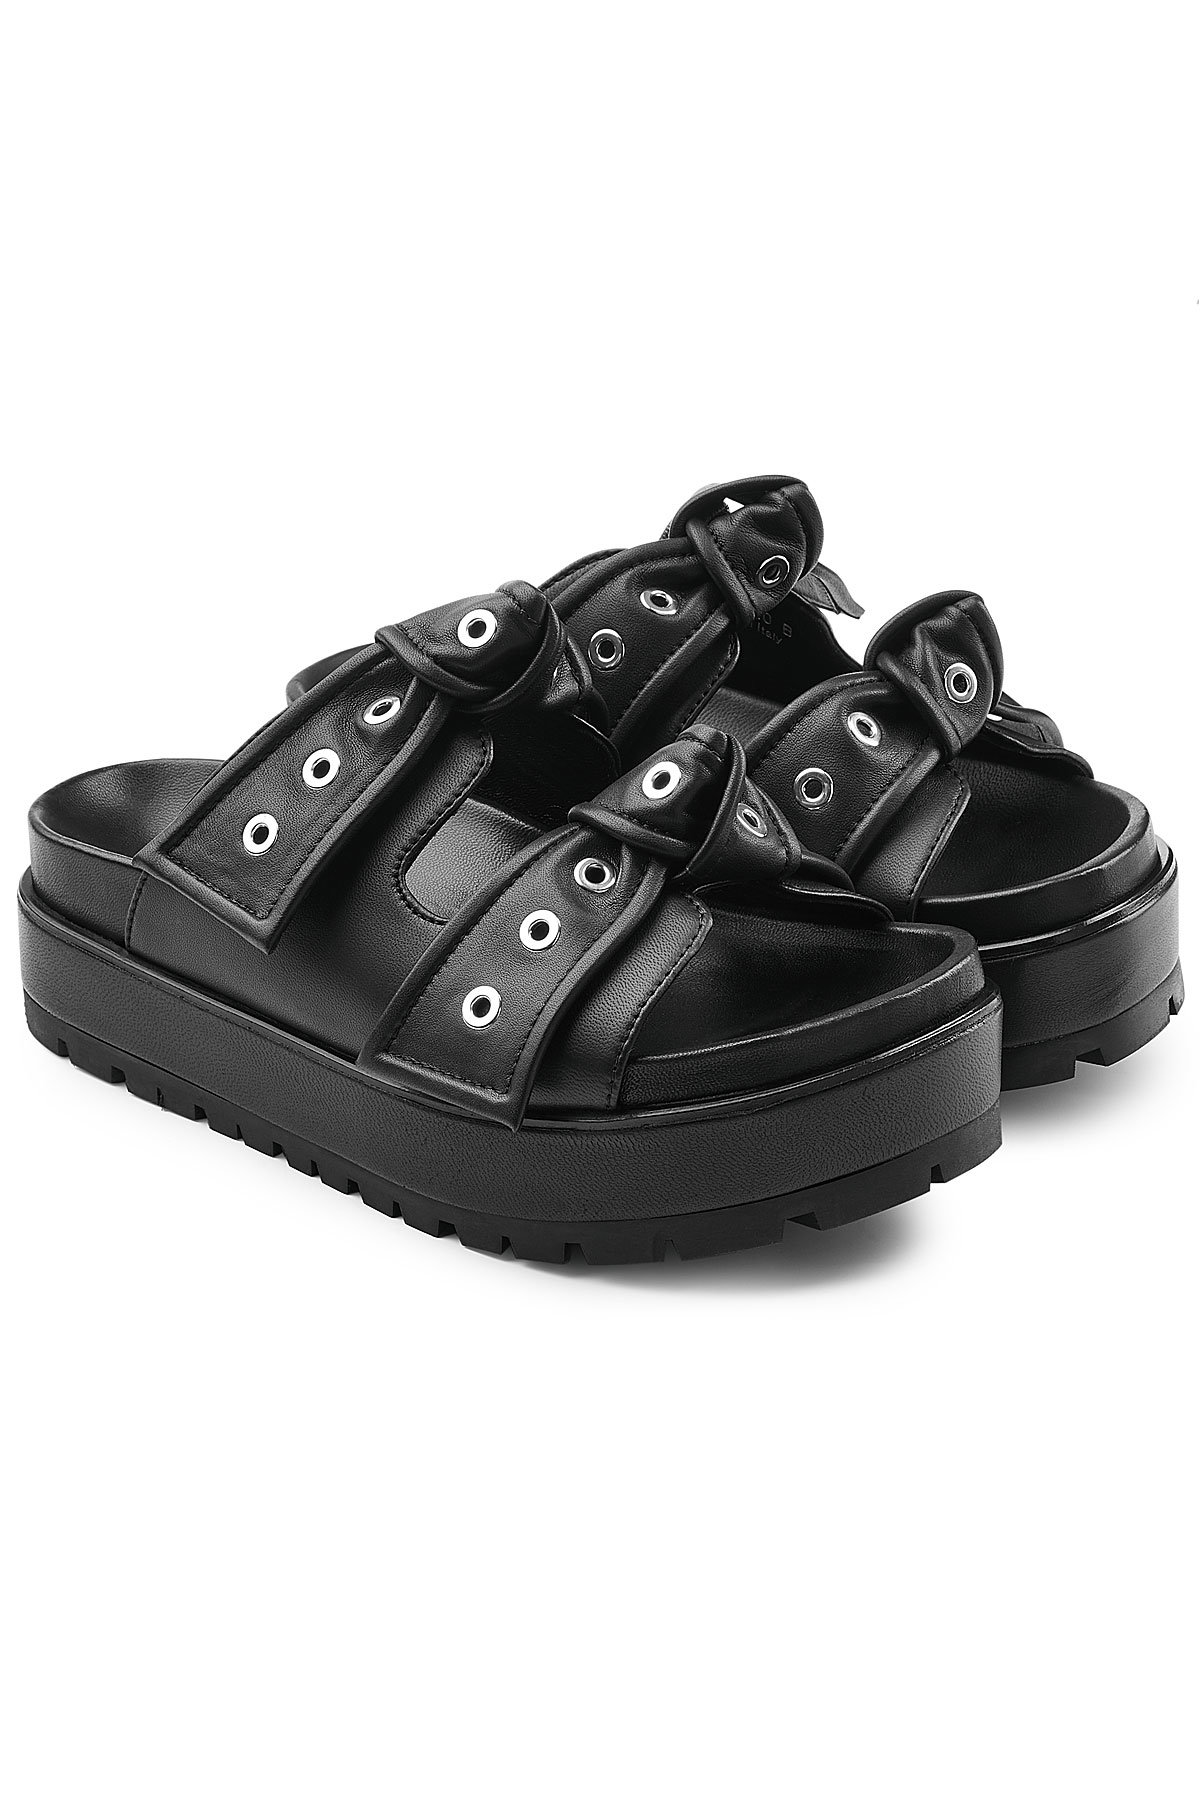 Alexander McQueen - Eyelet Leather Sandals